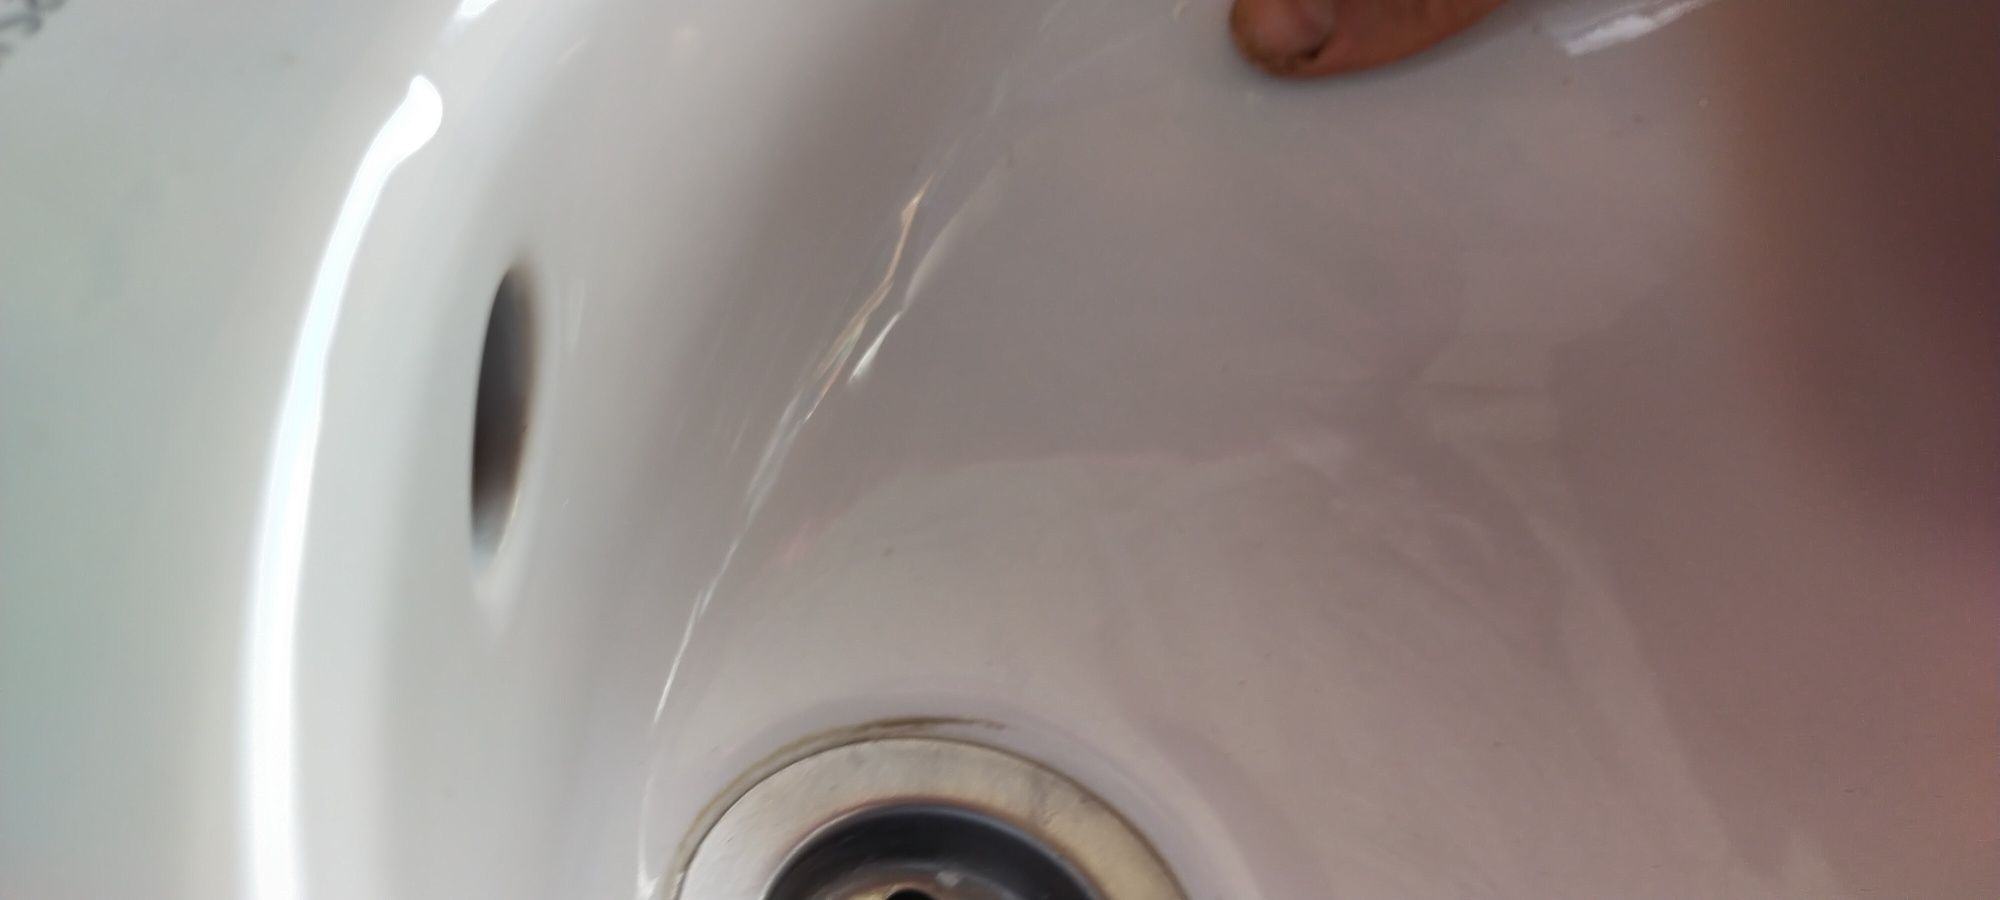 Umywalka Cersanit  mała 30cm